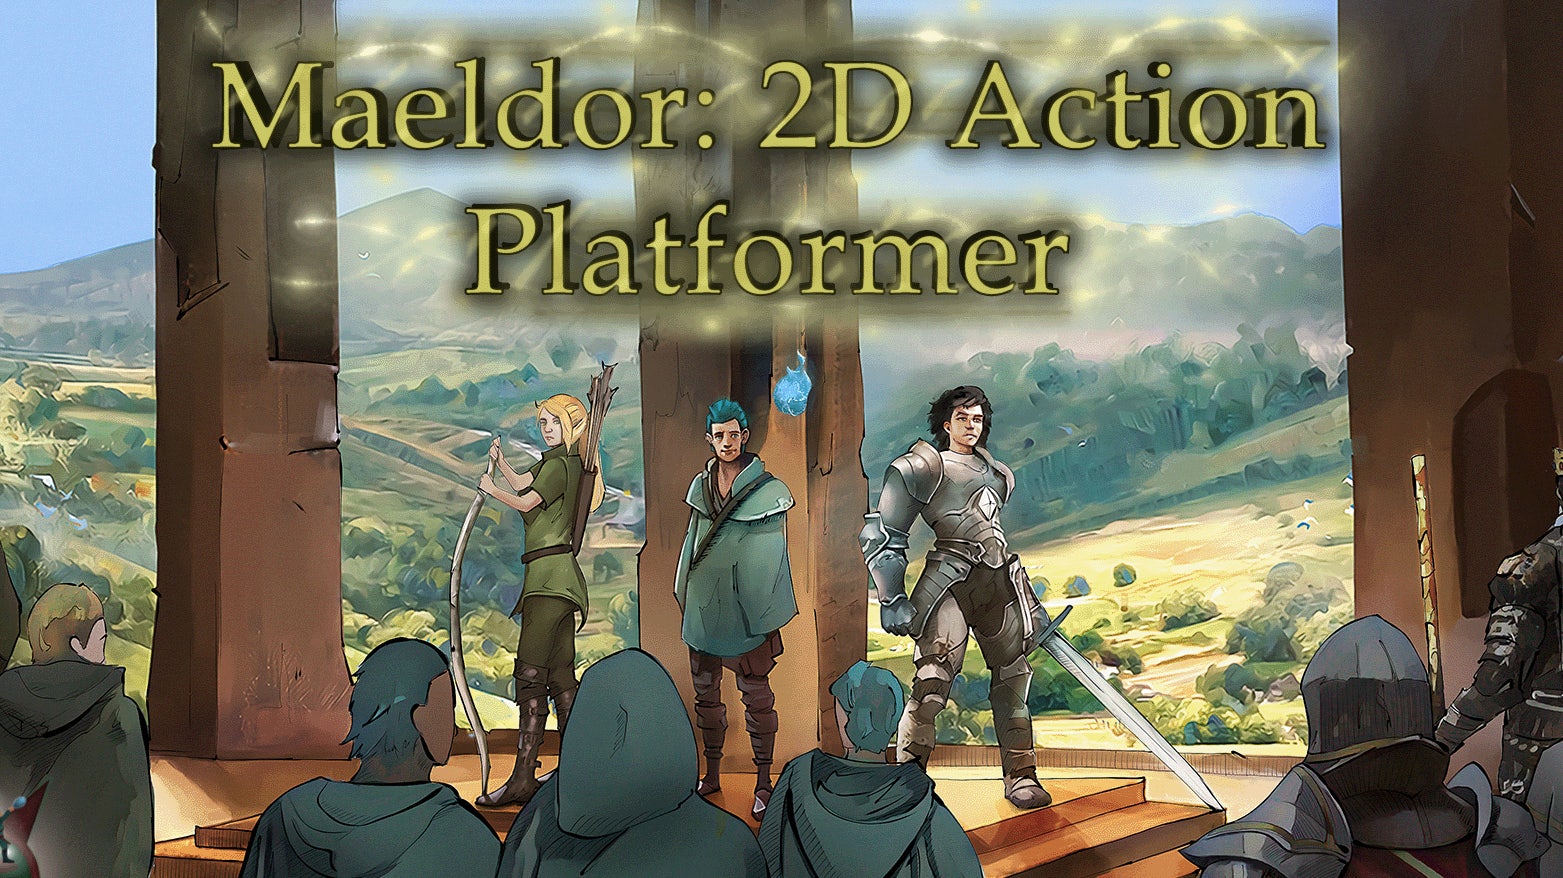 Maeldor: Action Platformer